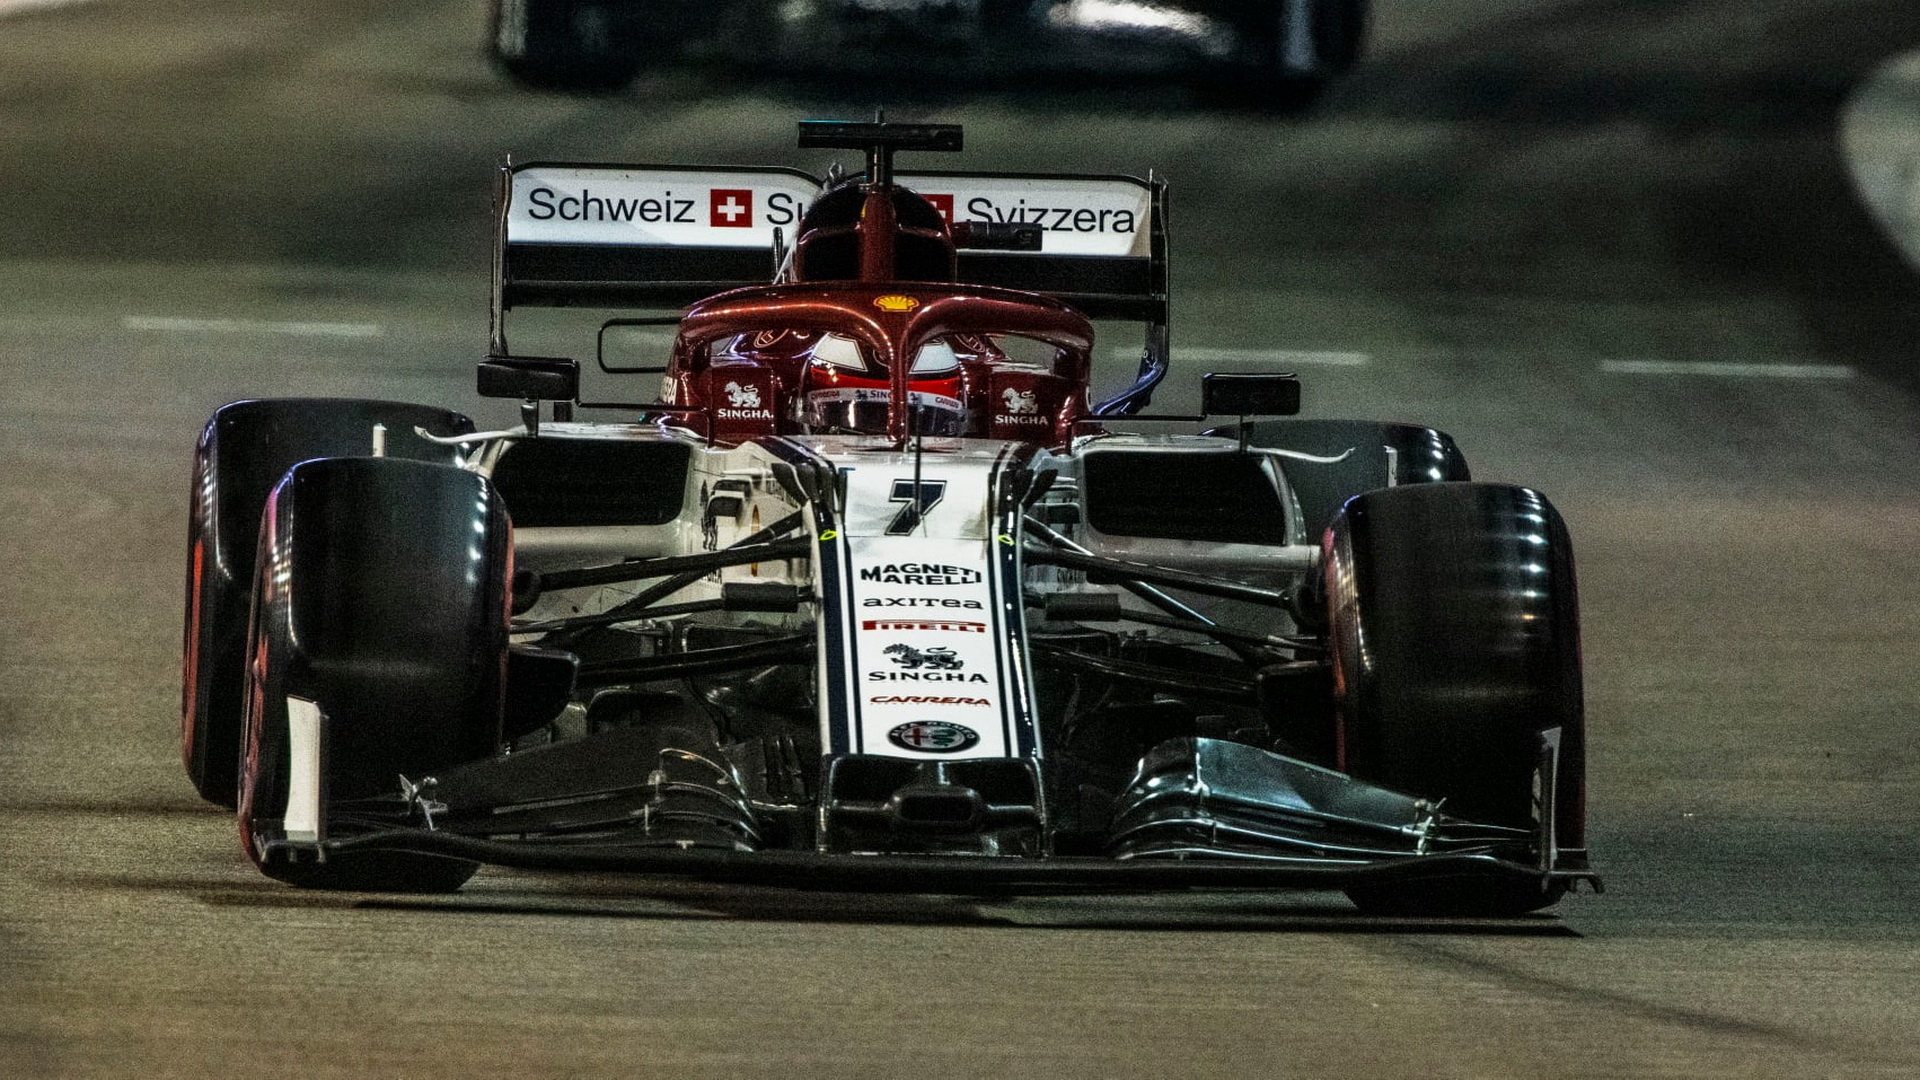 Kimi Räikkönen v závodě v Singapuru